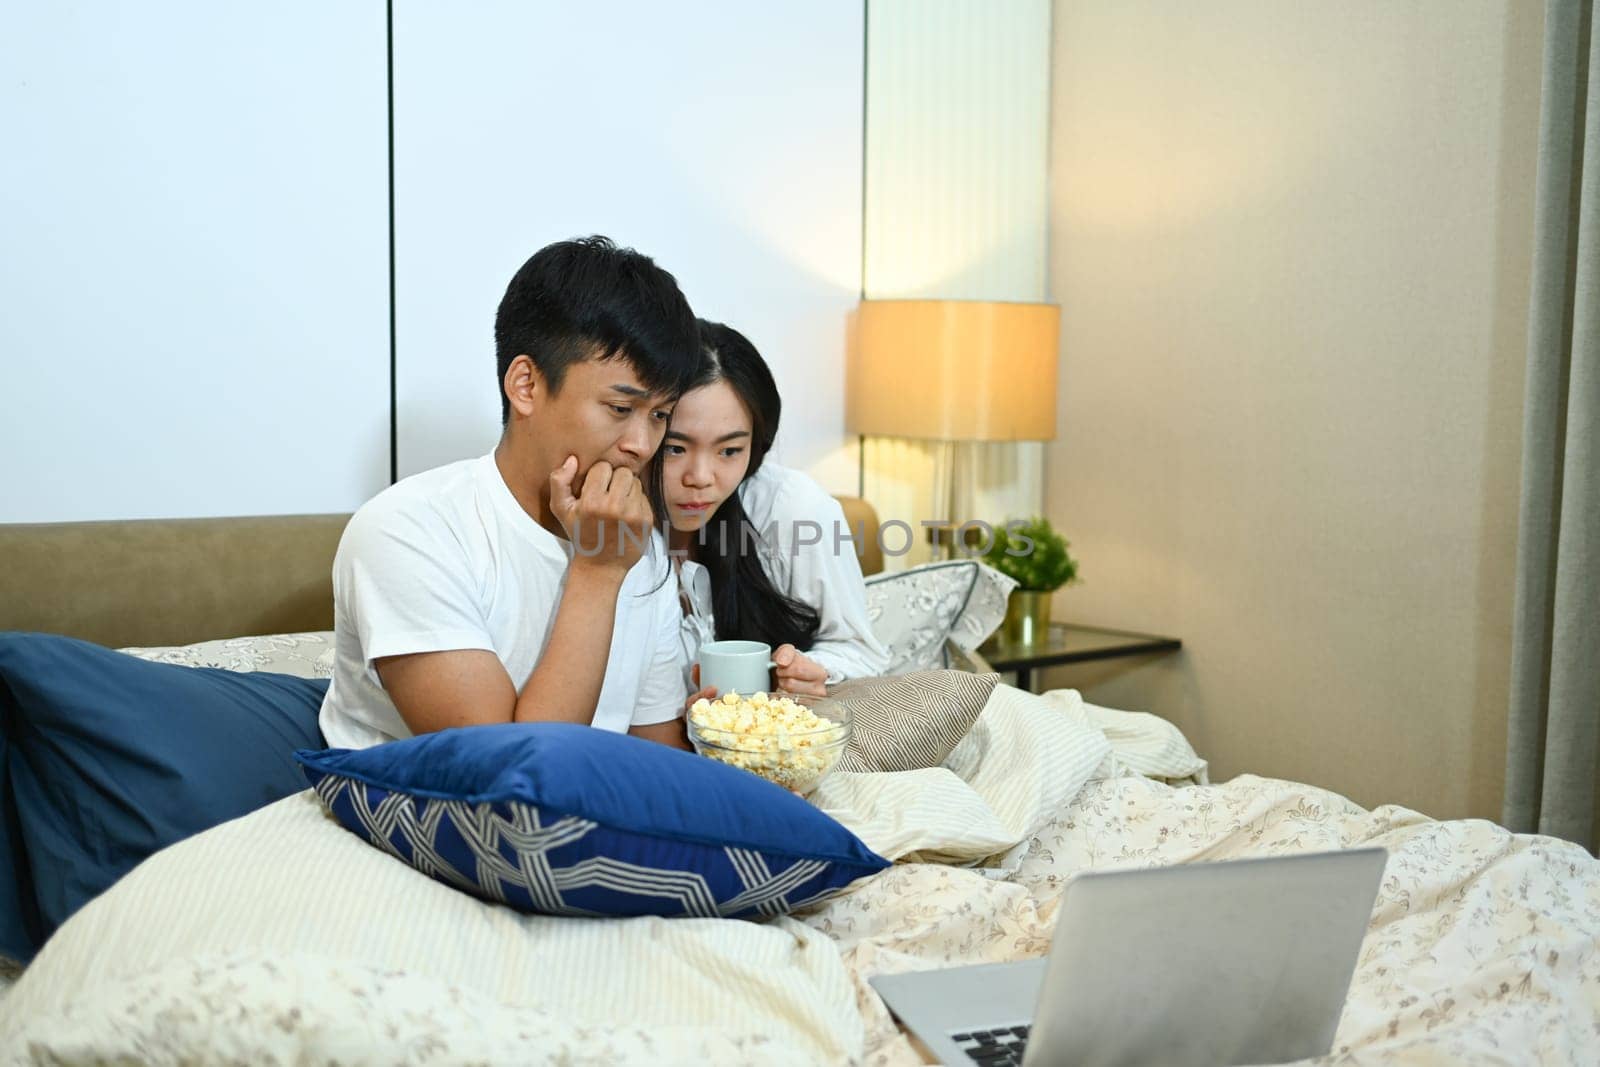 Excited couple watching horror movie on digital tablet during weekend in bedroom.